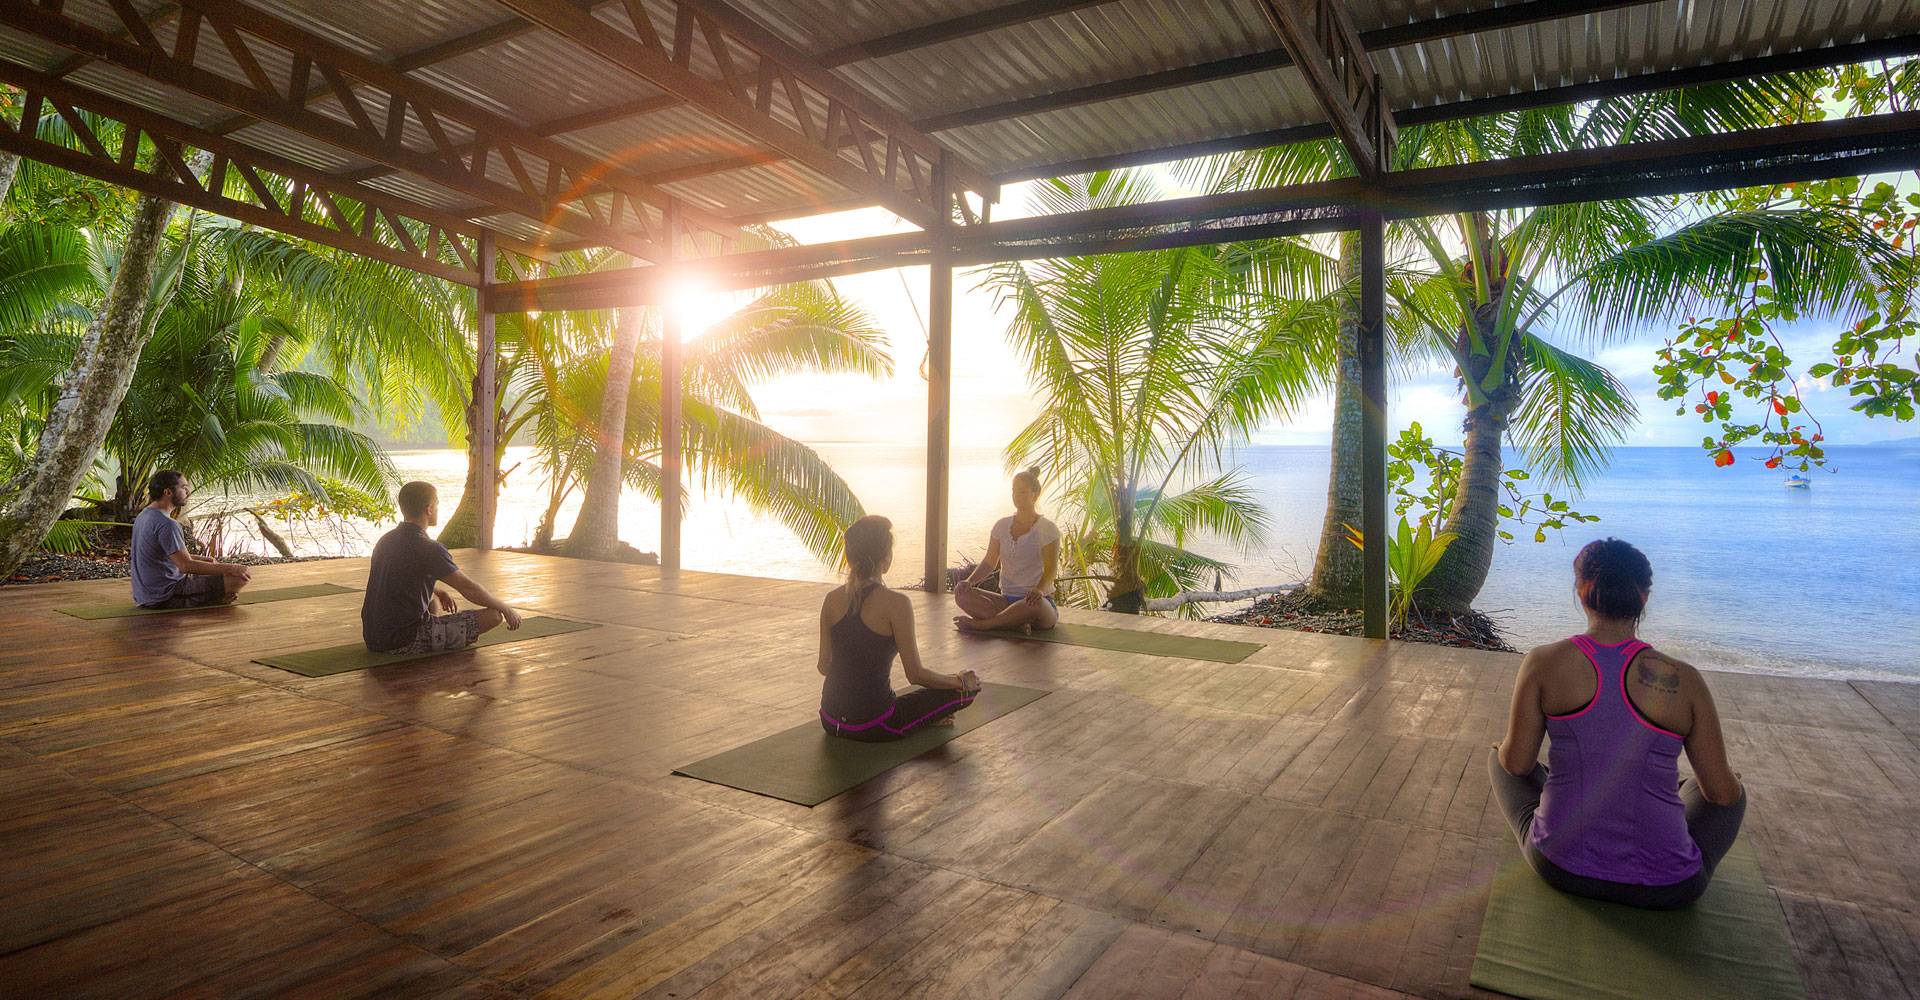 Costa Rica, Playa Nicuesa Lodge, Yoga Deck, Latin America Tours